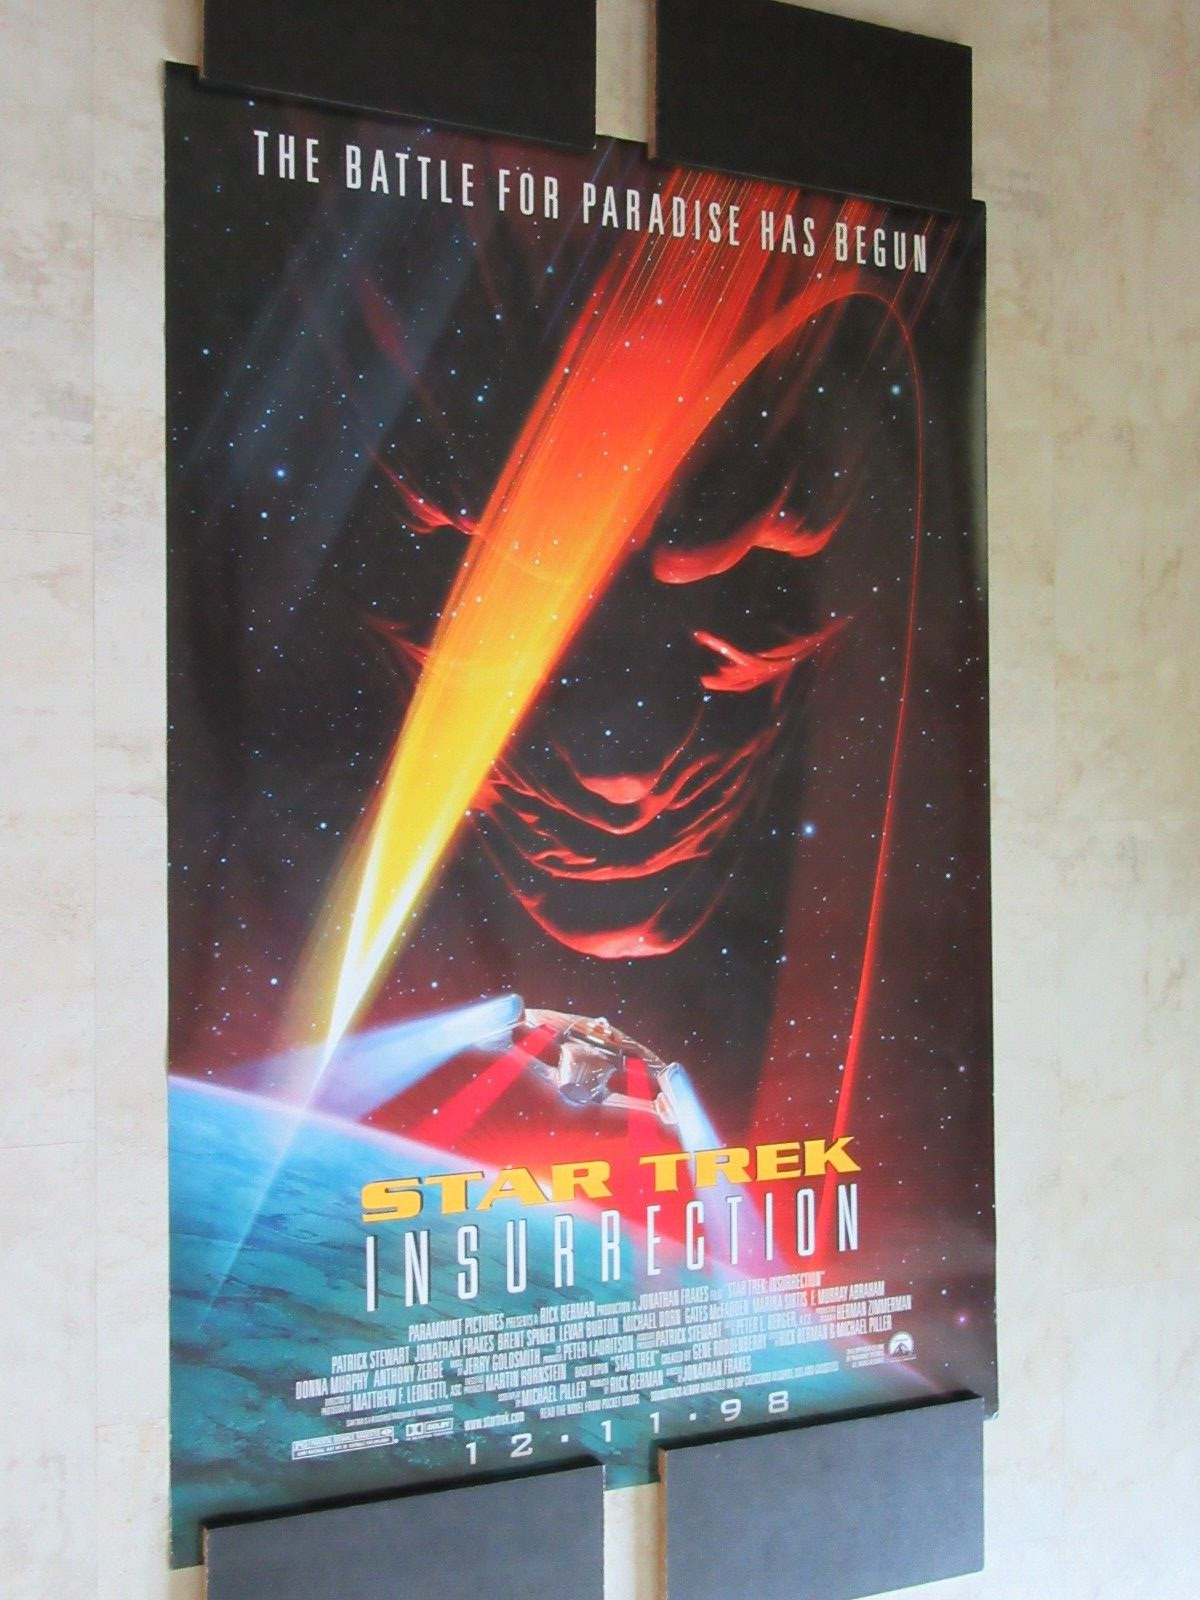 Star Trek: Insurrection [double-sided] 27x40 [original] D/s Movie Theater Poster